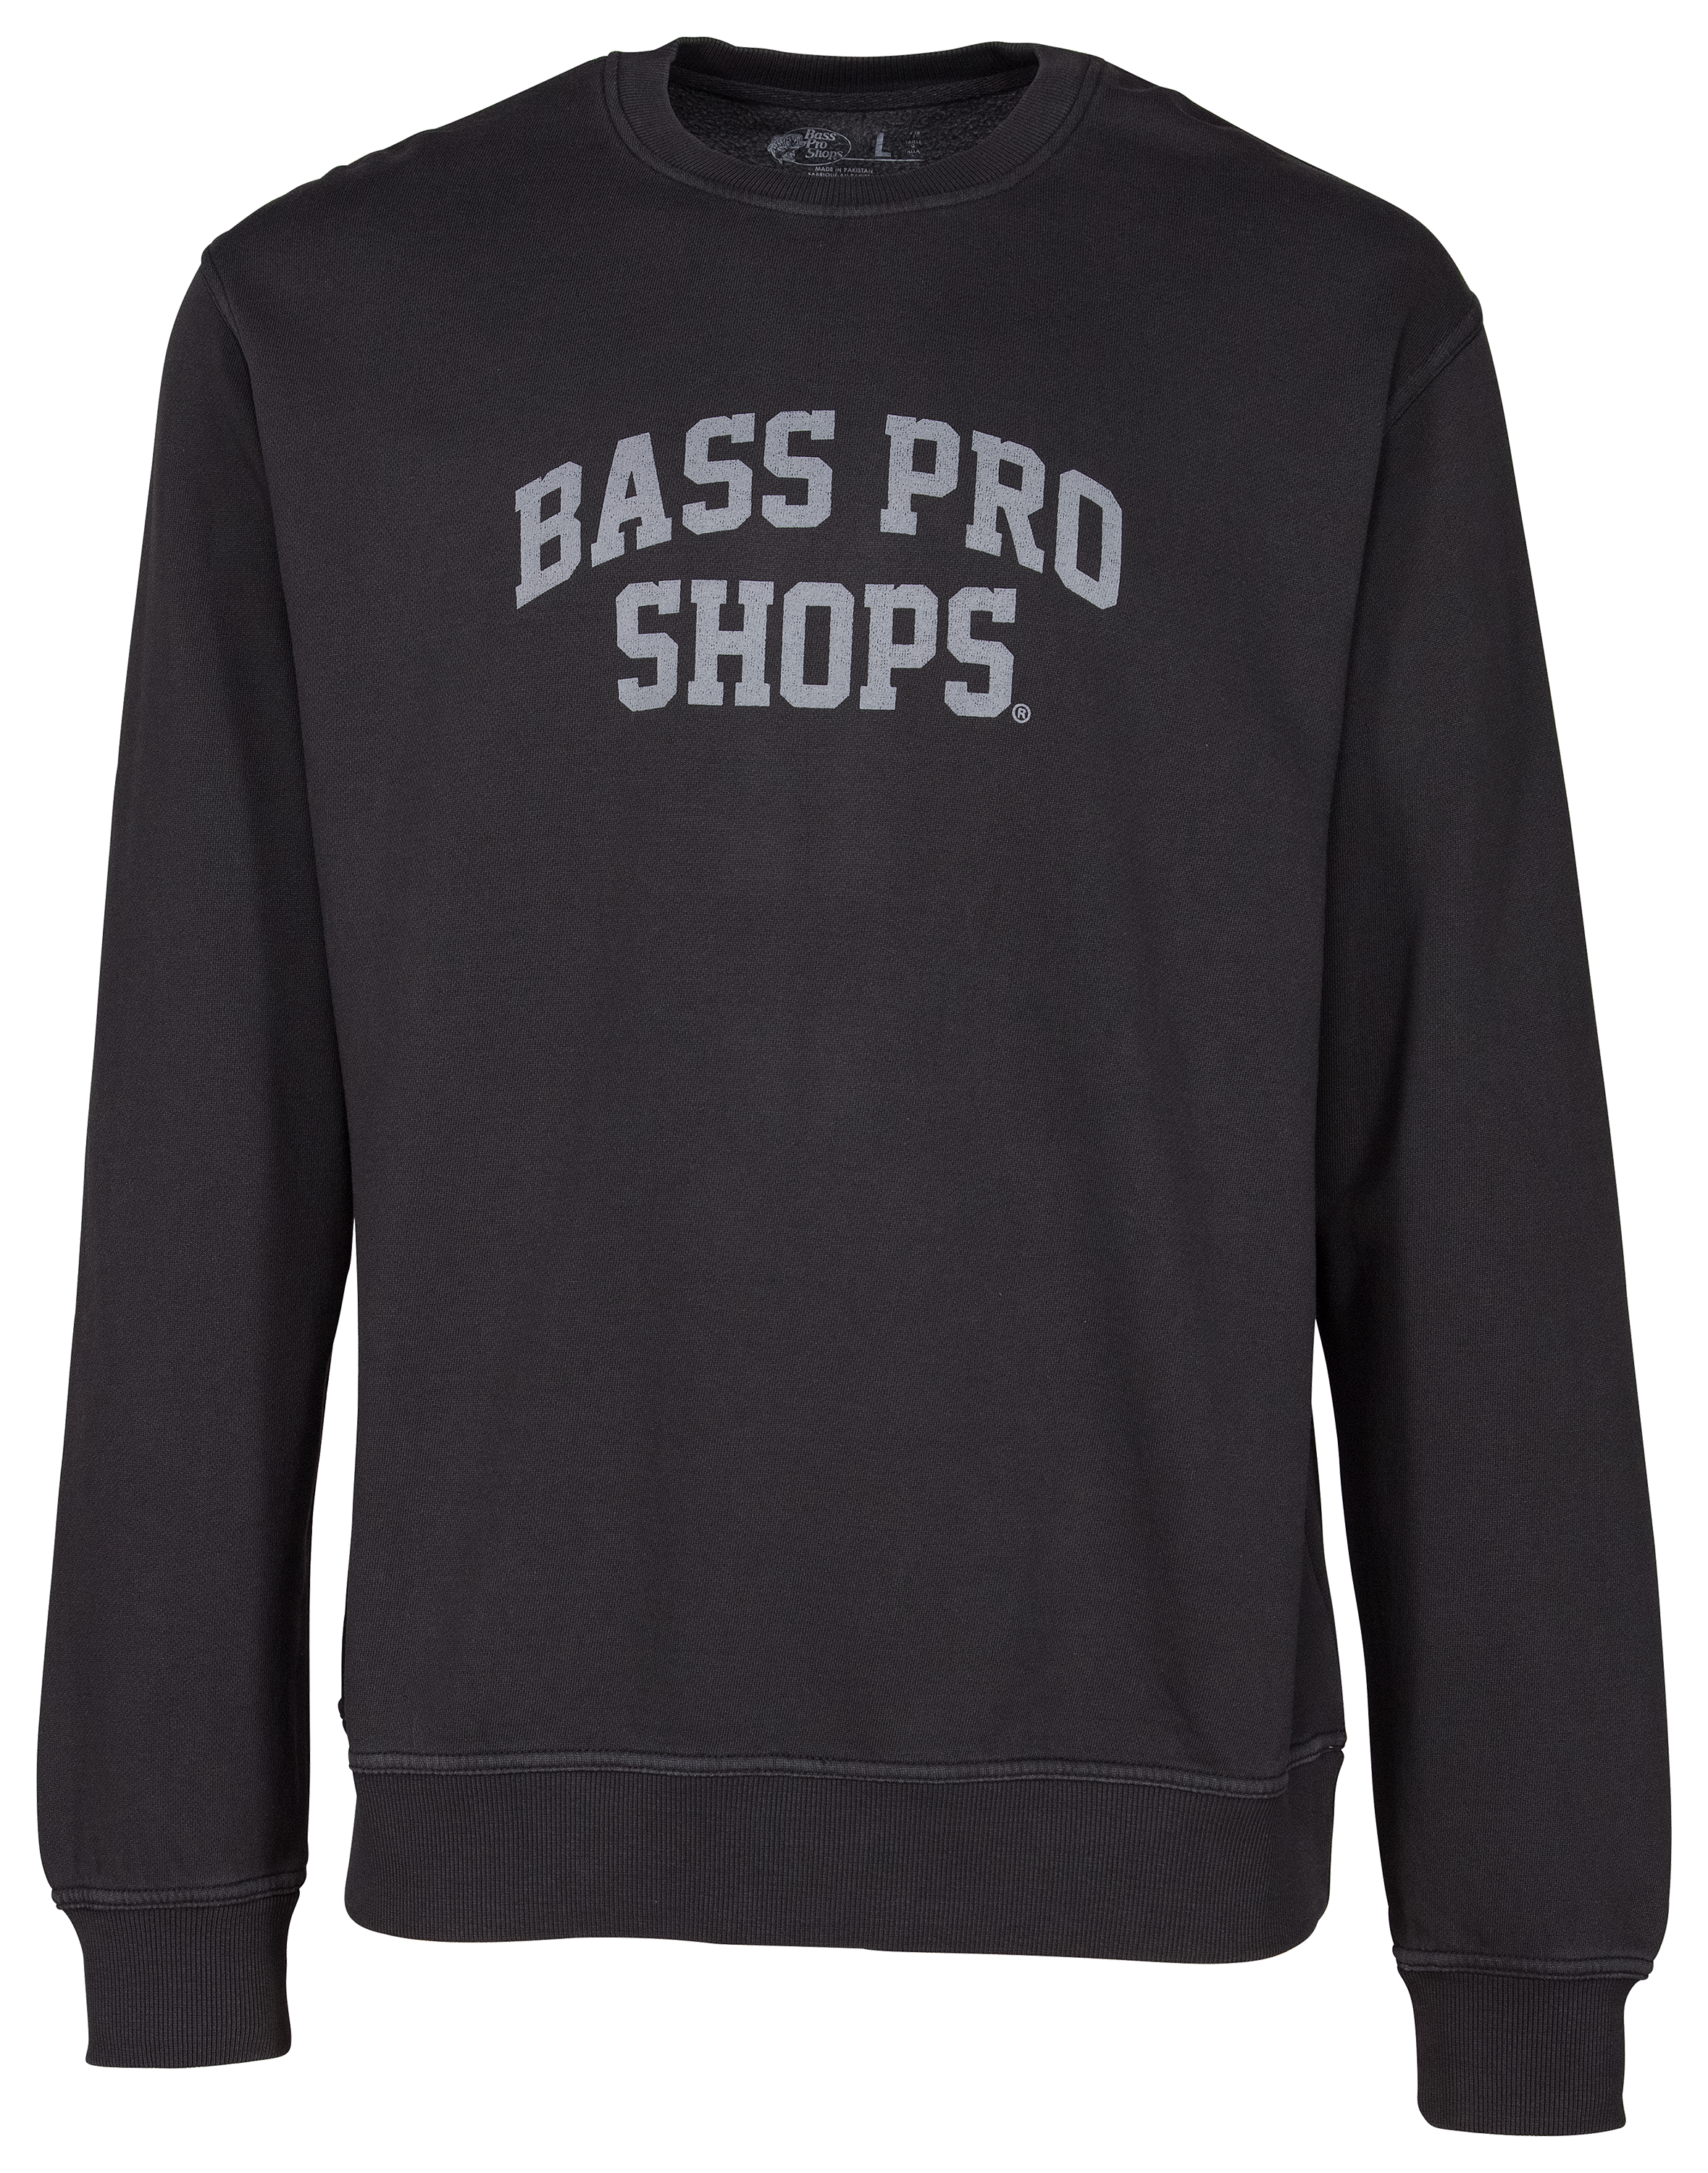 Bass Pro Shops Long-Sleeve Crew Sweatshirt for Men